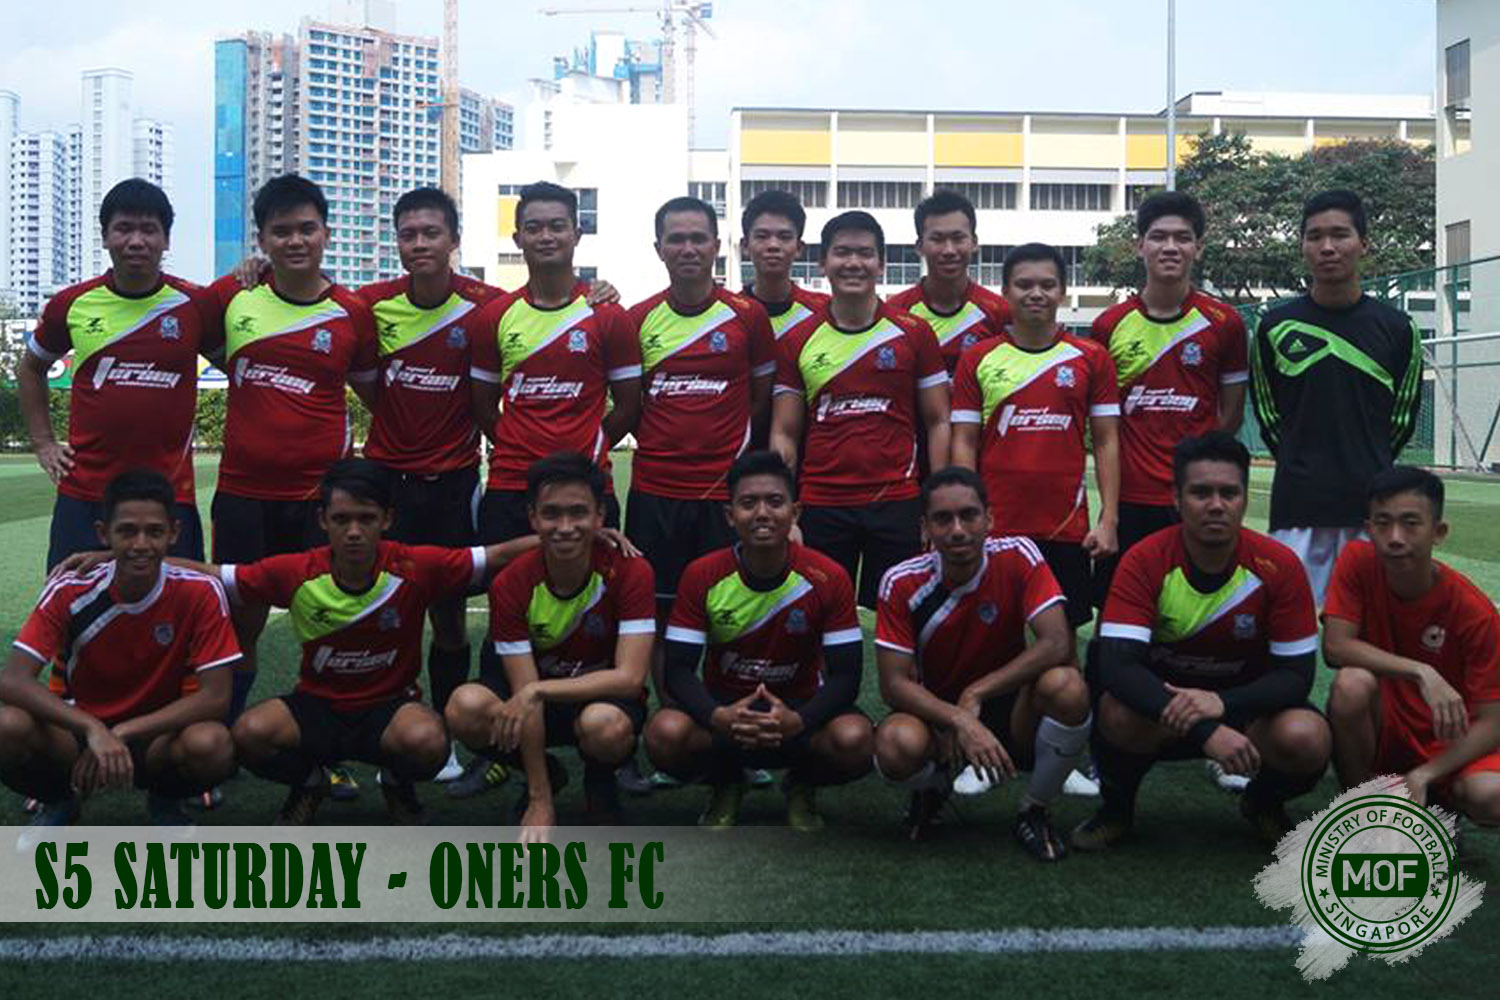 Oners FC